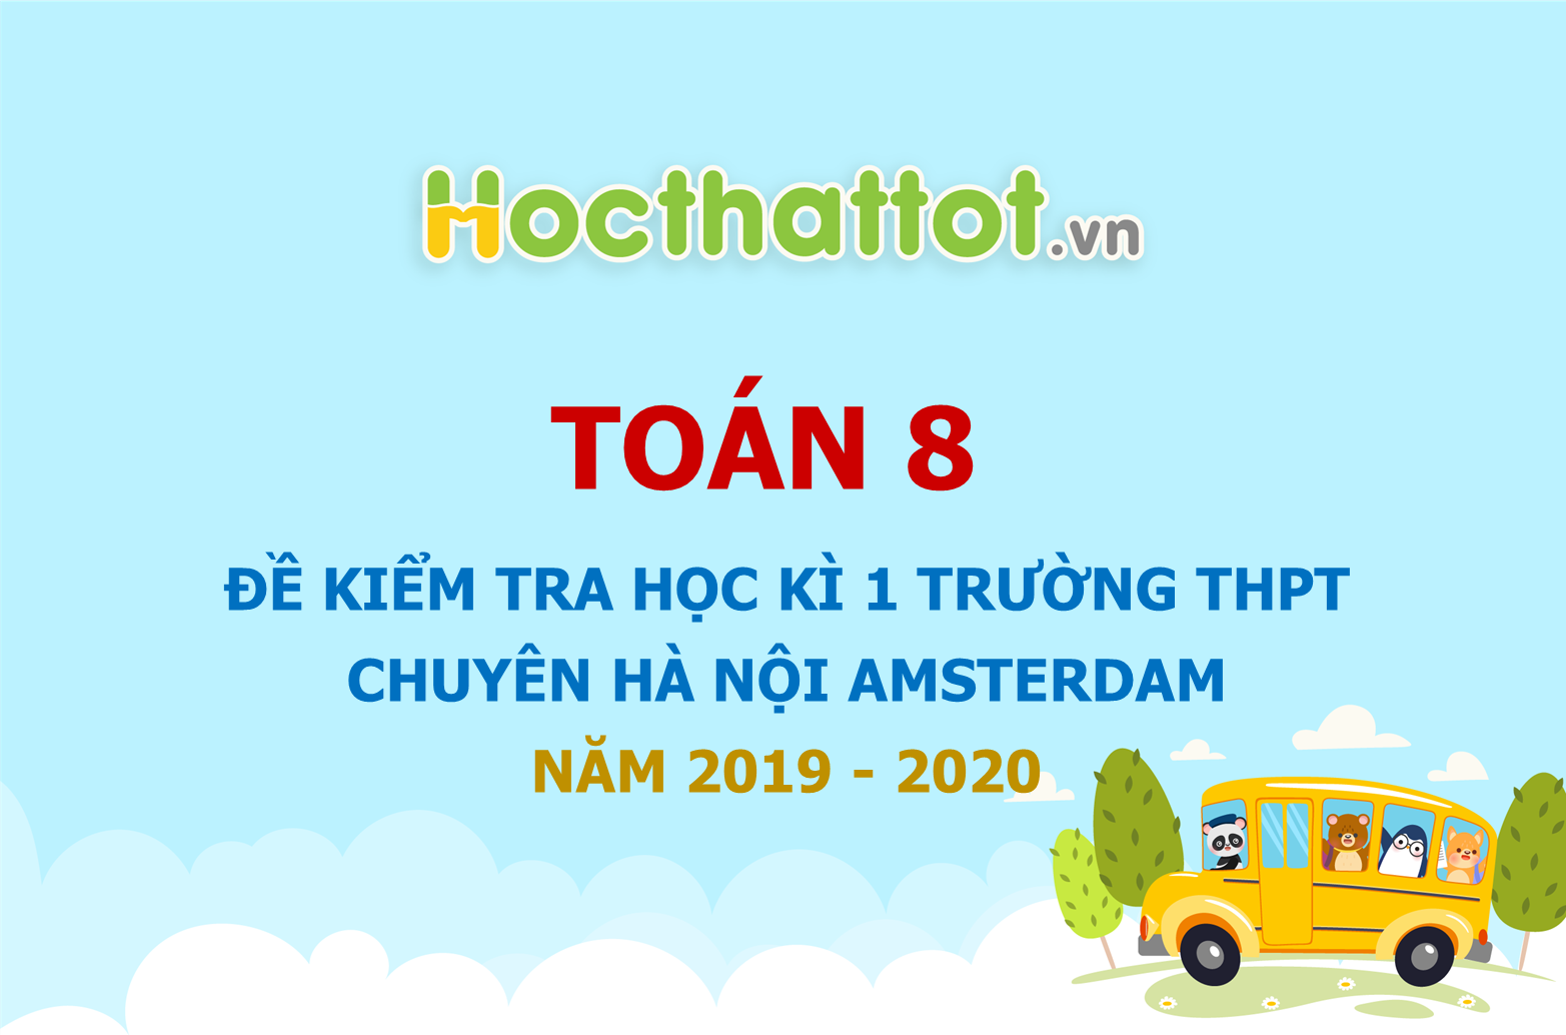 de-kiem-tra-hoc-ki-1-lop8-truong-thpt-chuyen-ha-noi-amsterdam-nam-2019-2020